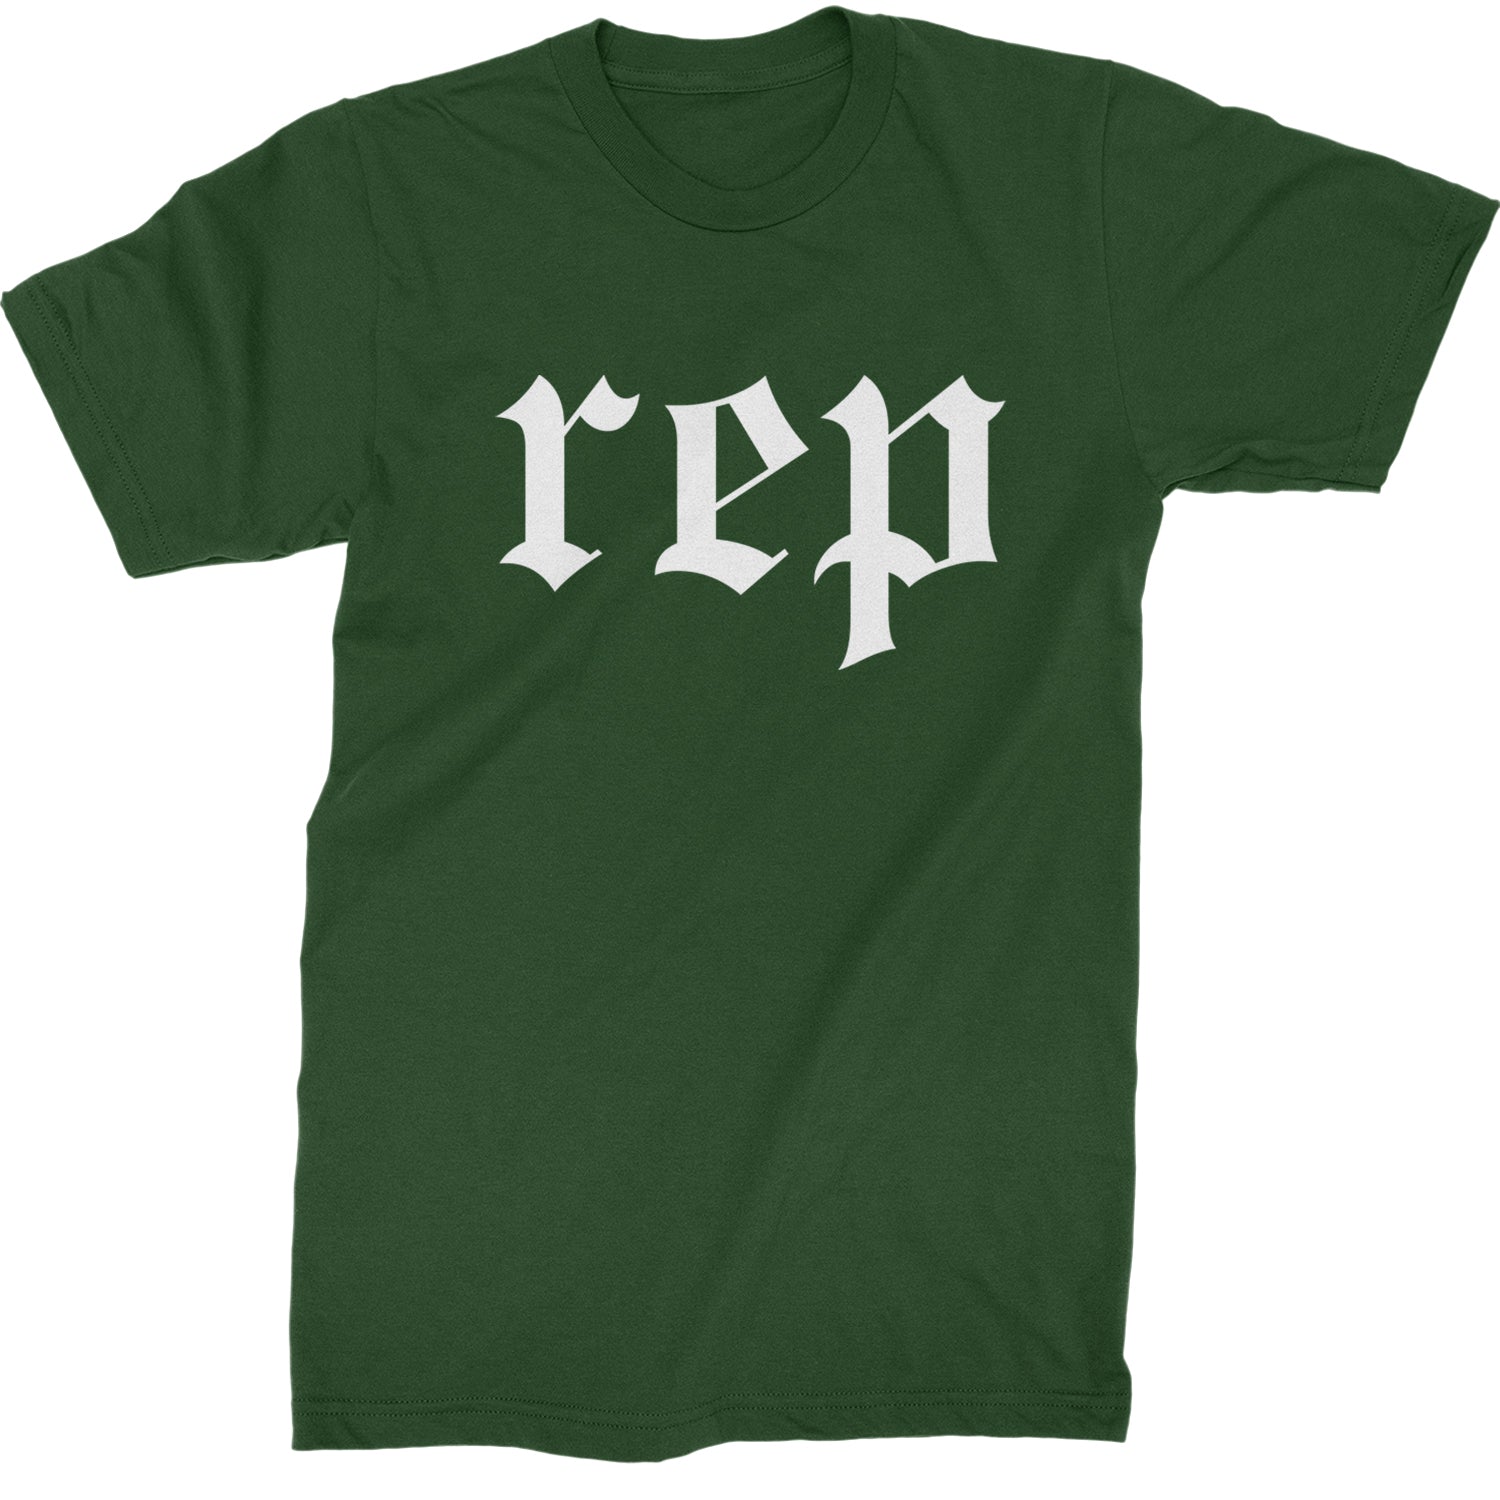 REP Reputation Eras Music Lover Gift Fan Favorite Mens T-shirt Forest Green